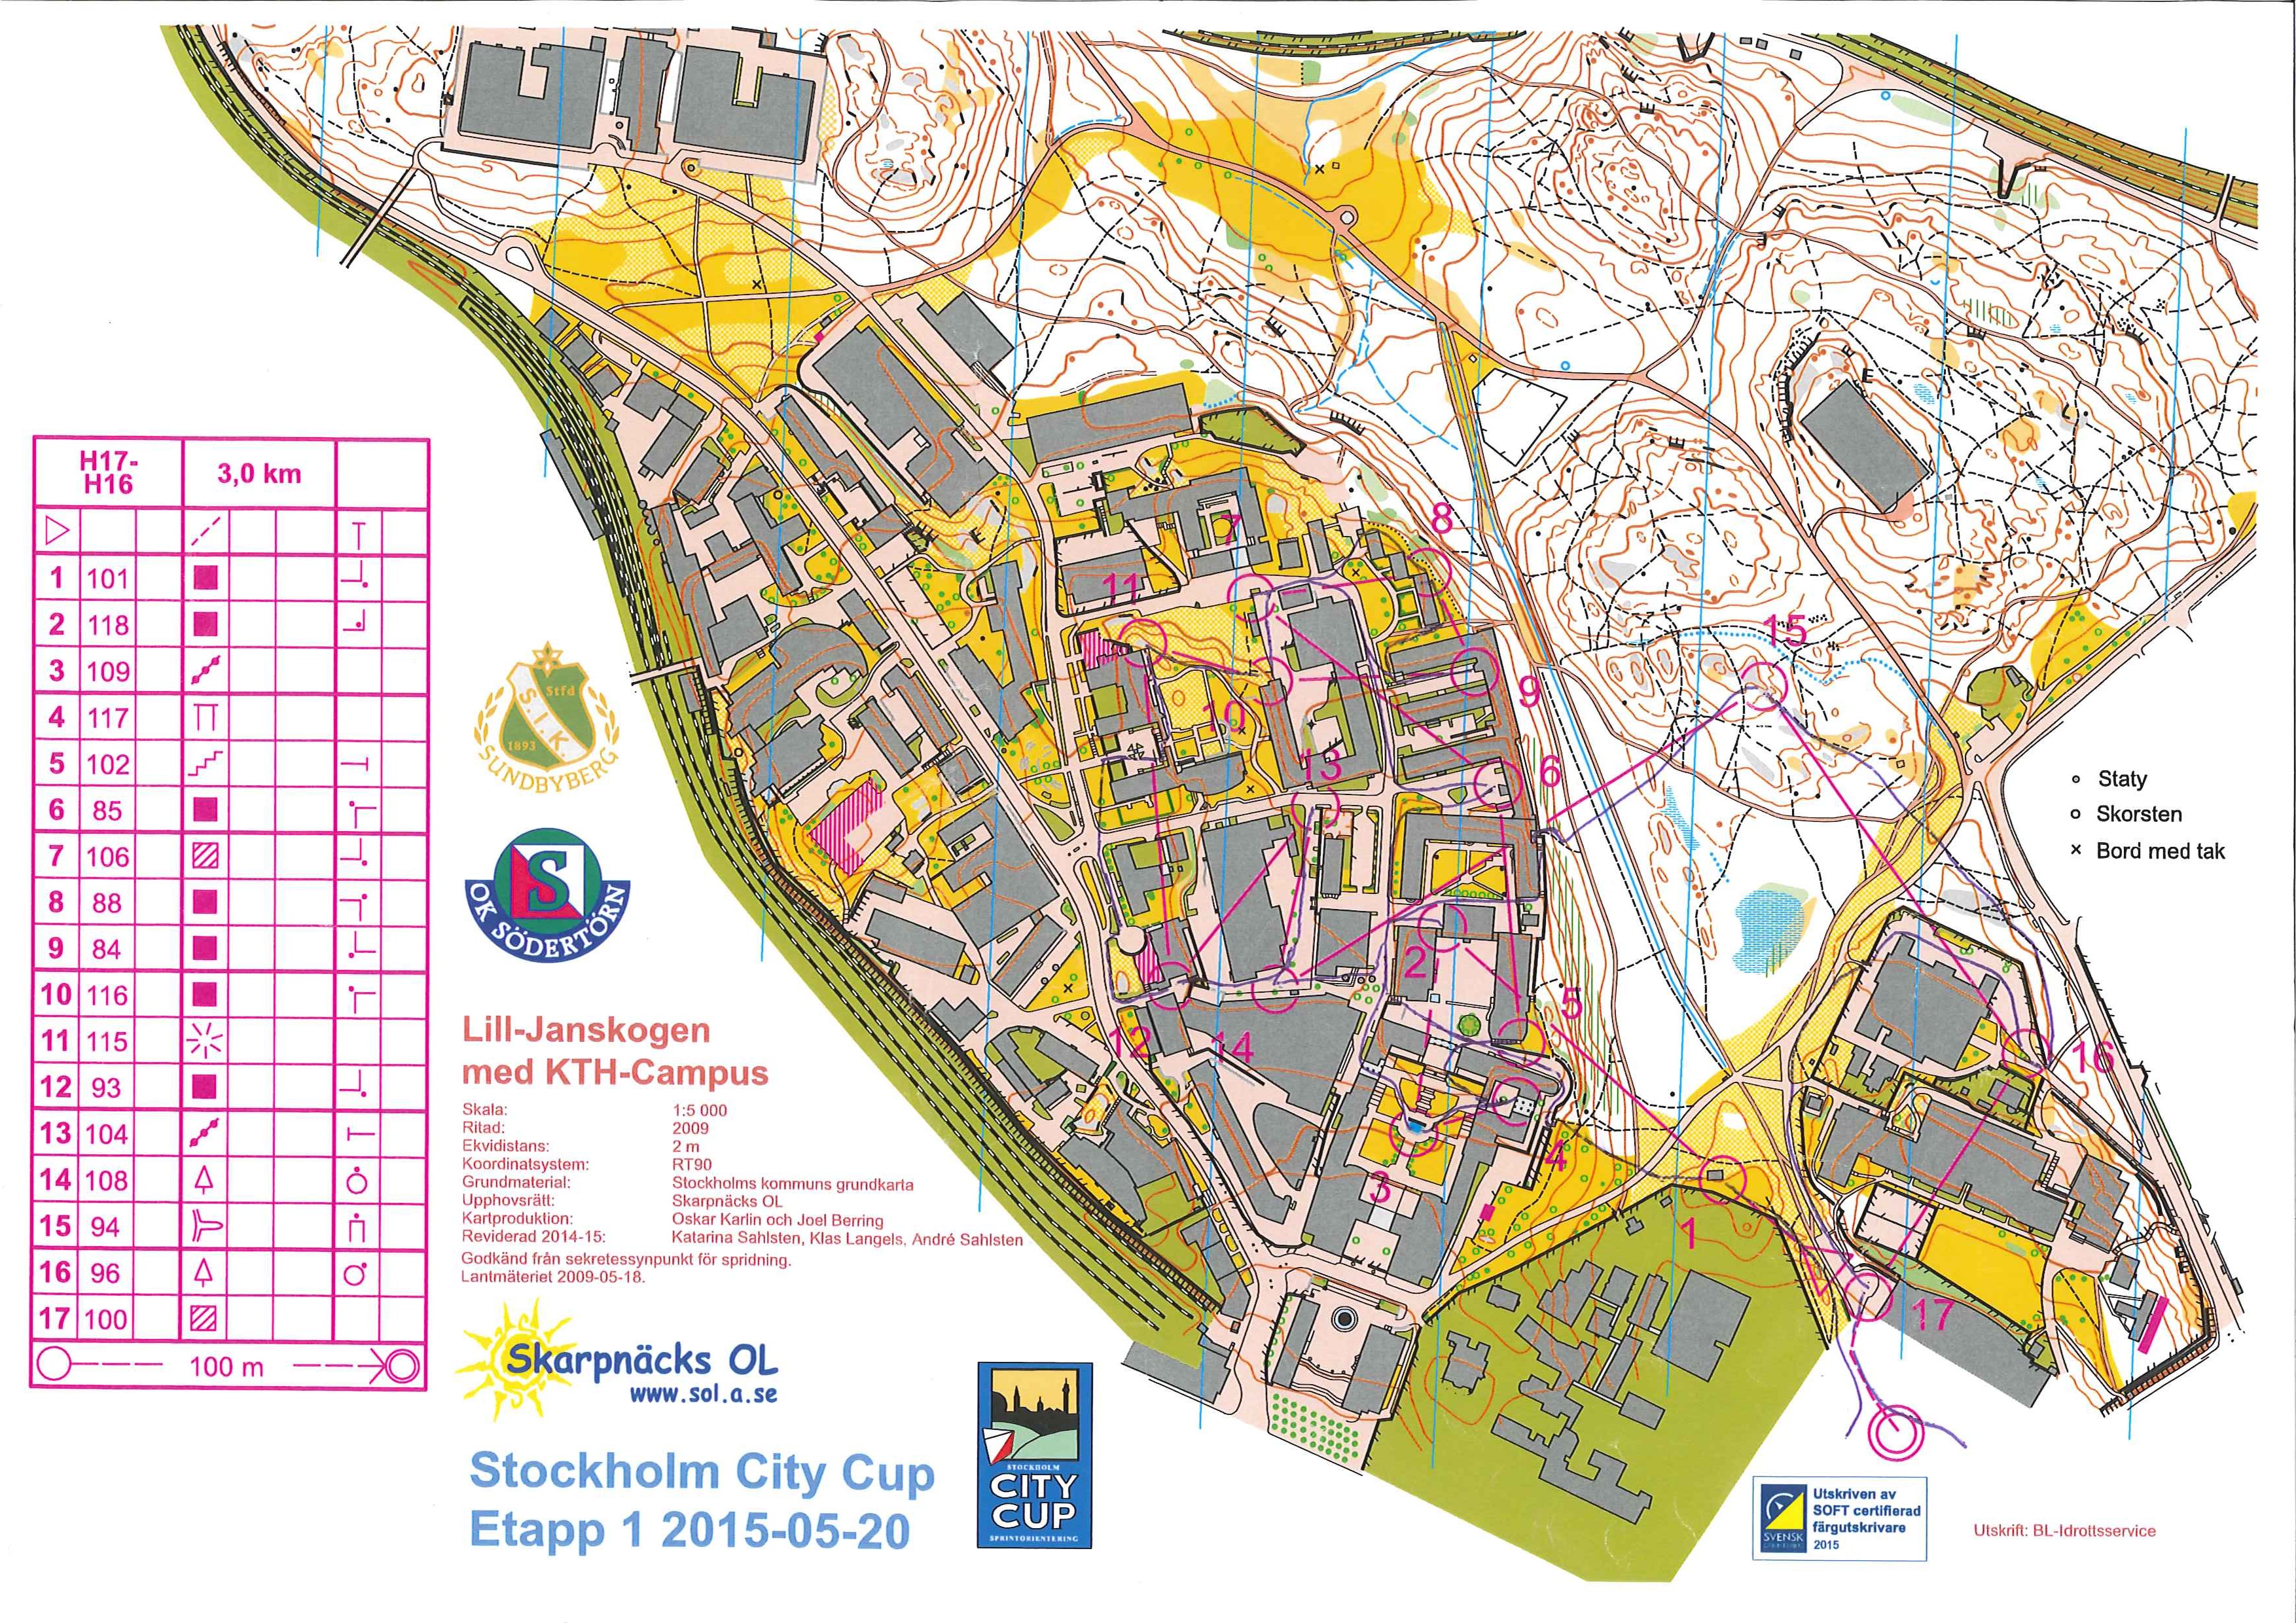 Sthlm City Cup Etapp 1 (19-05-2015)